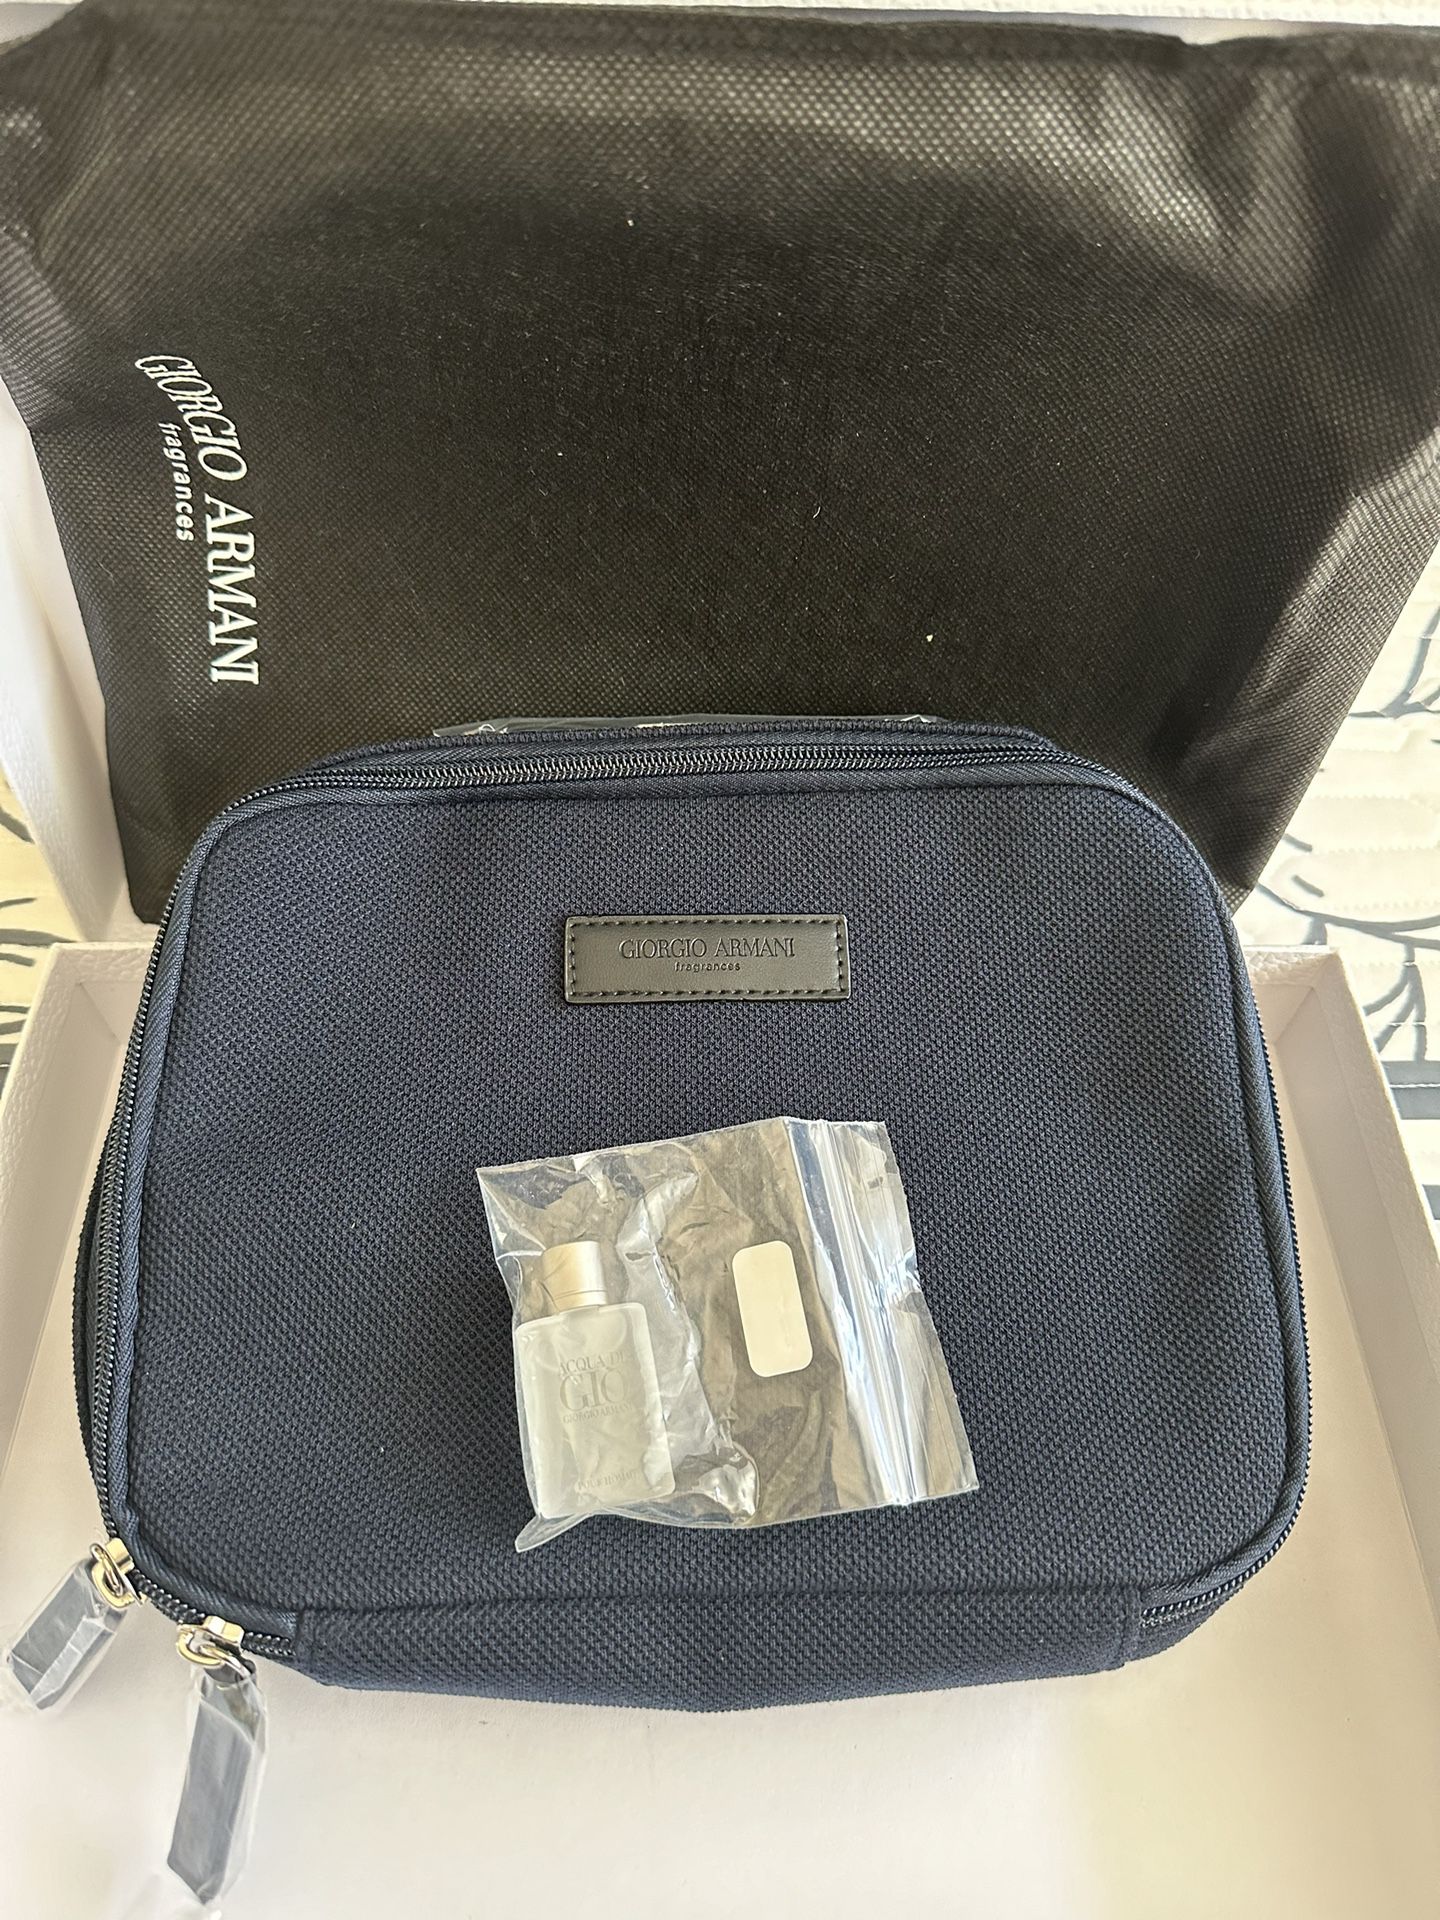 Giorgio Armani travel pouch and 5 ml perfume samples